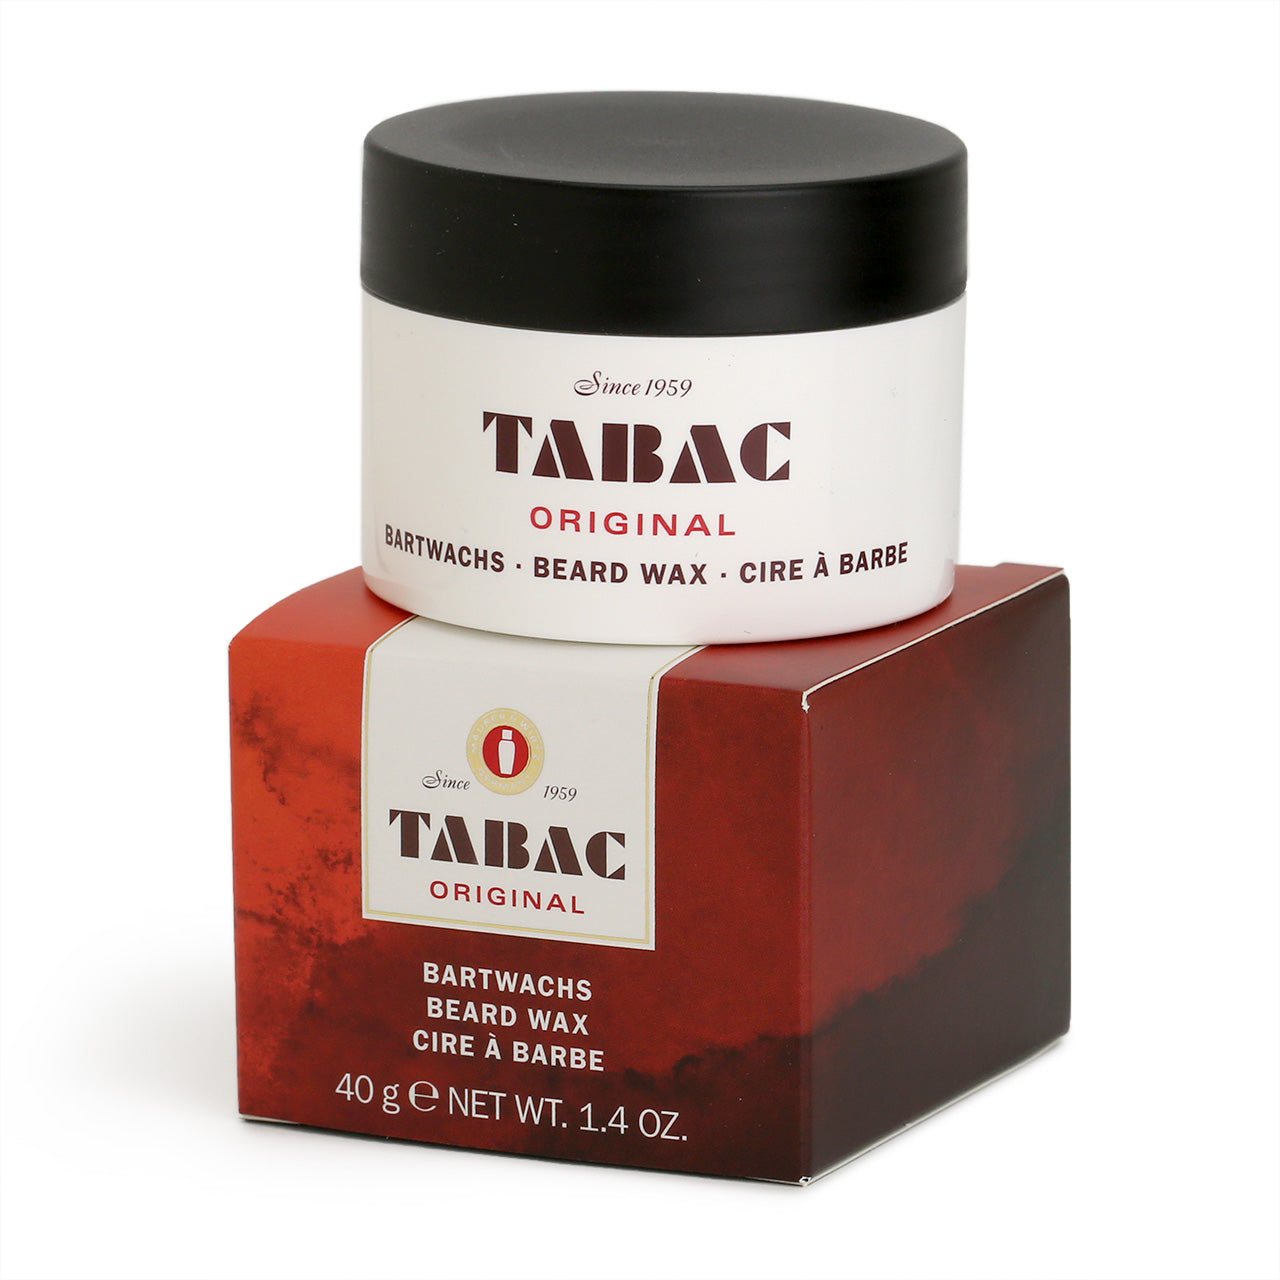 Tabac Original Beard Wax tub sitting on the signature packaging